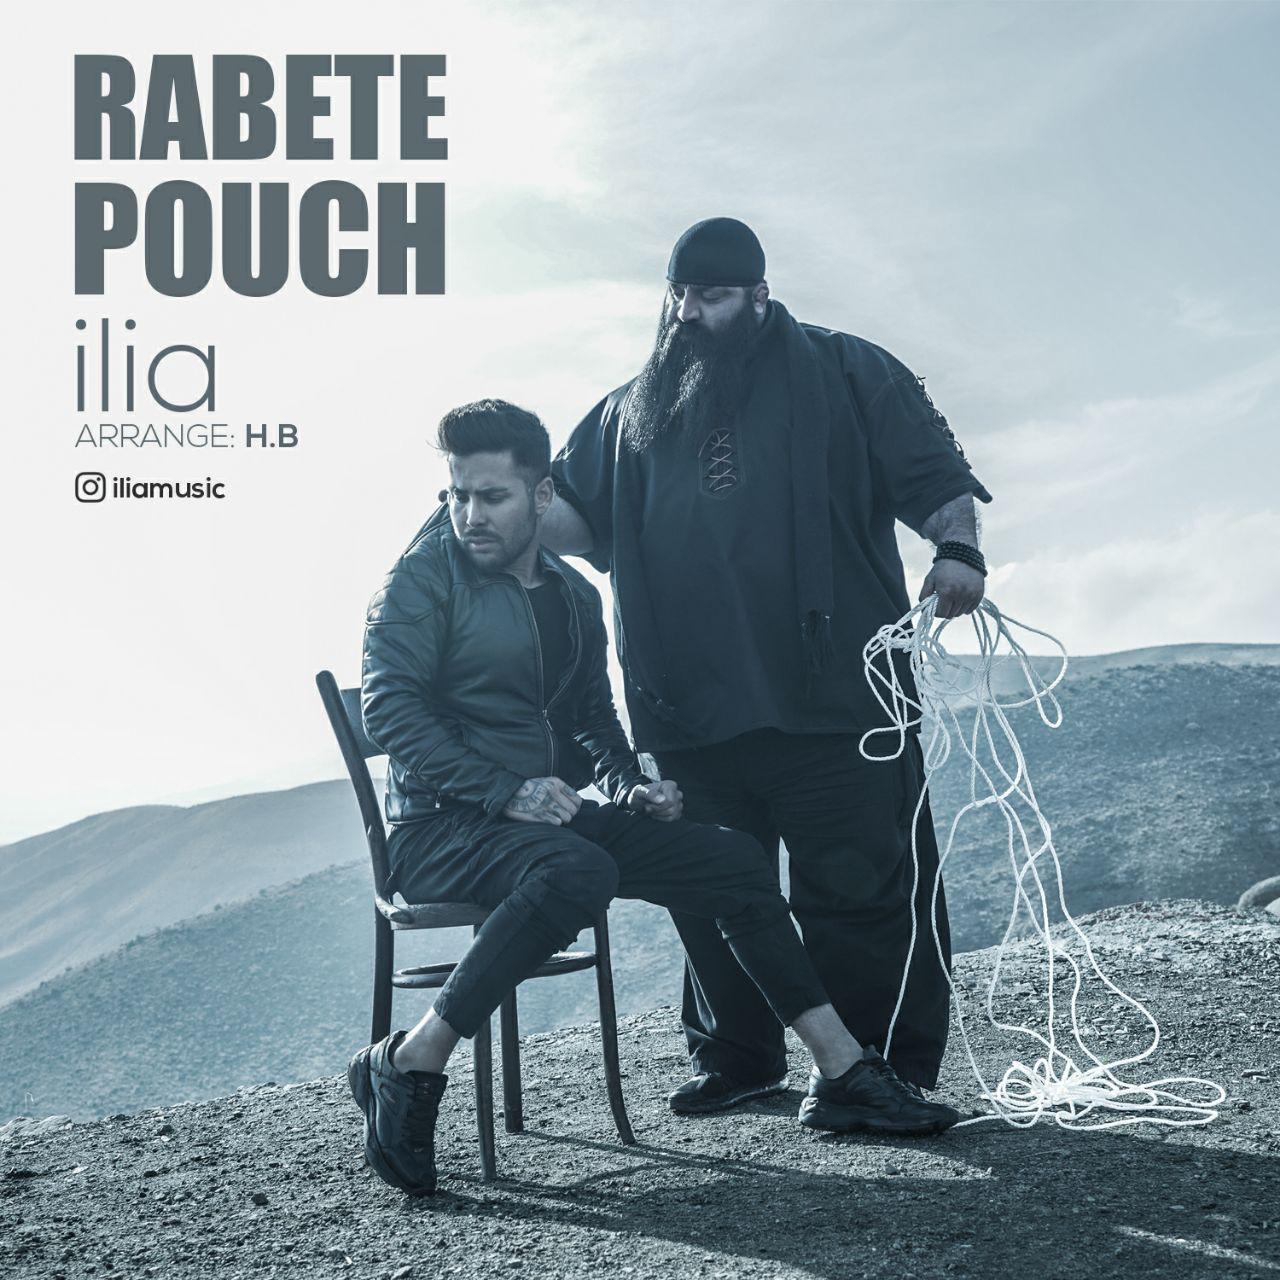  دانلود آهنگ جدید ایلیا - رابطه پوچ | Download New Music By iliya - Rabete Pouch